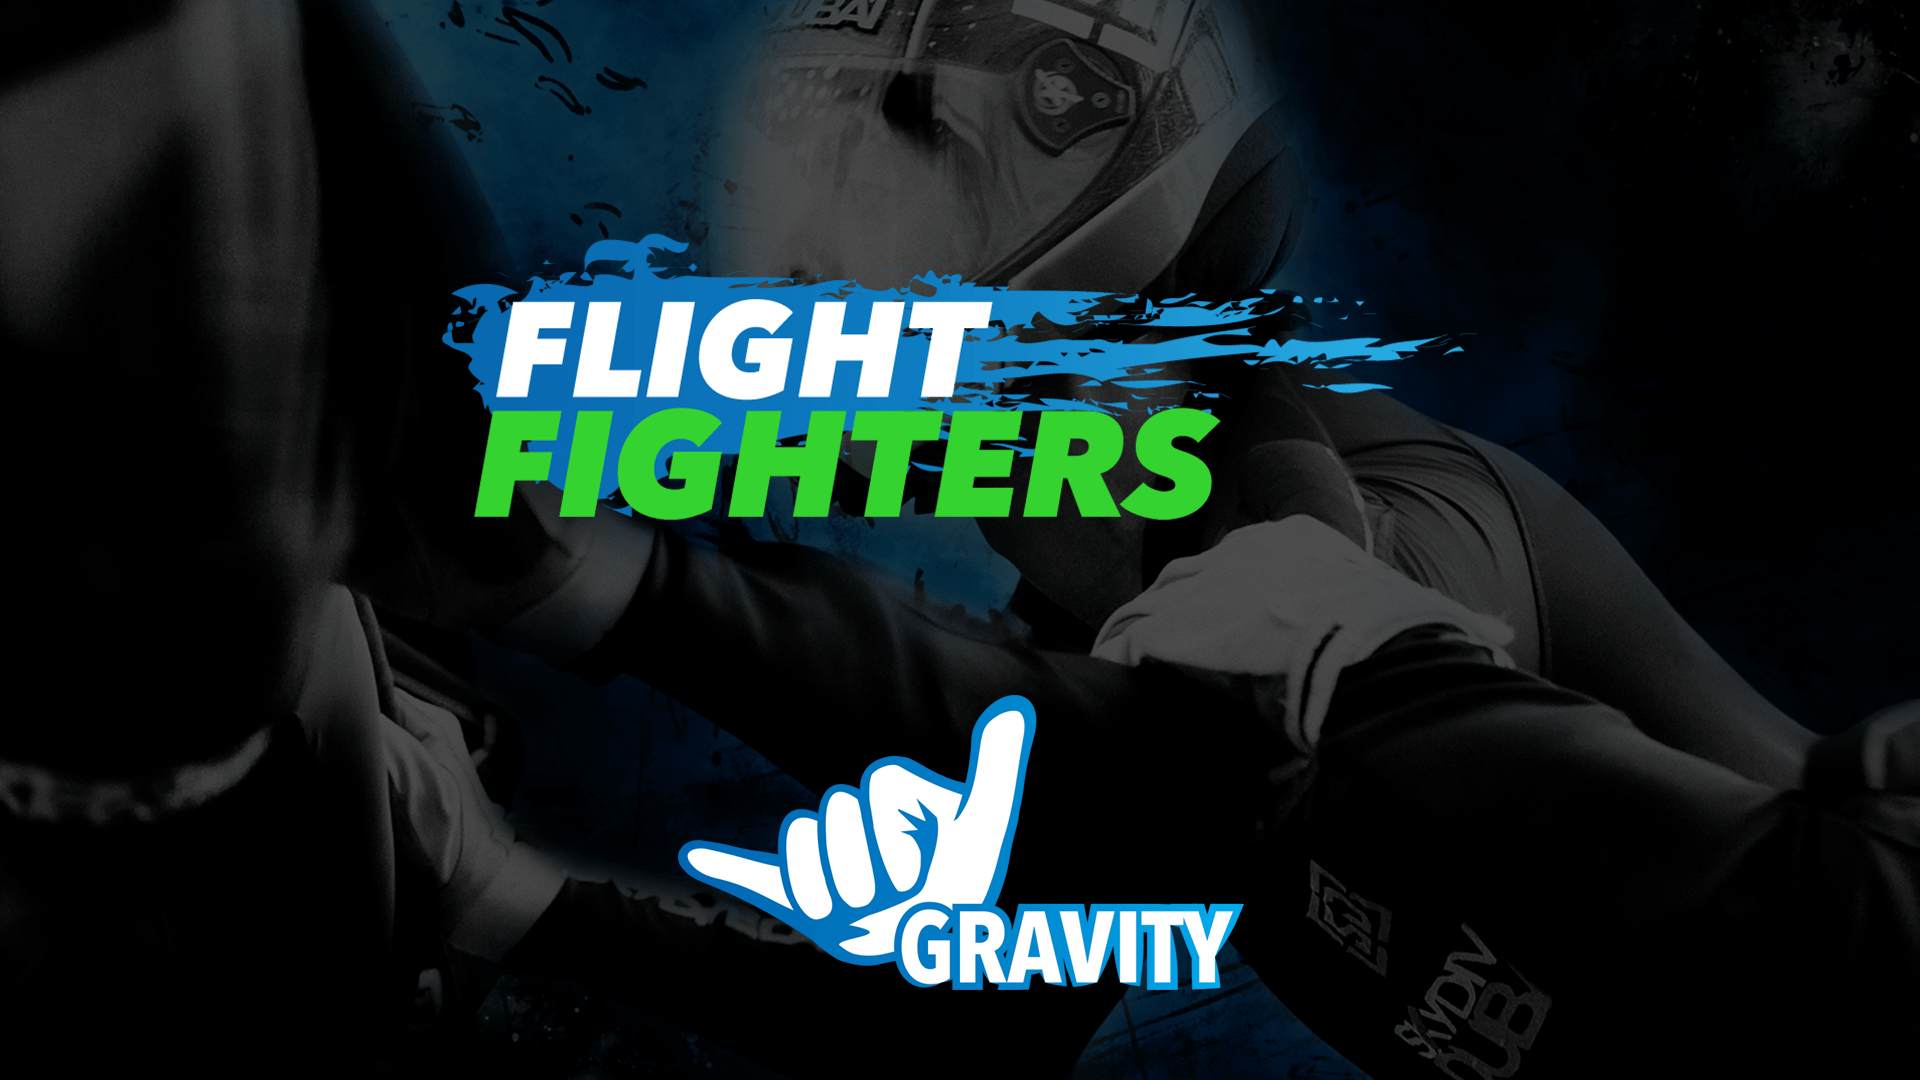 Gravity Bahrain Flight Fighters 2017 Livestream Full Production